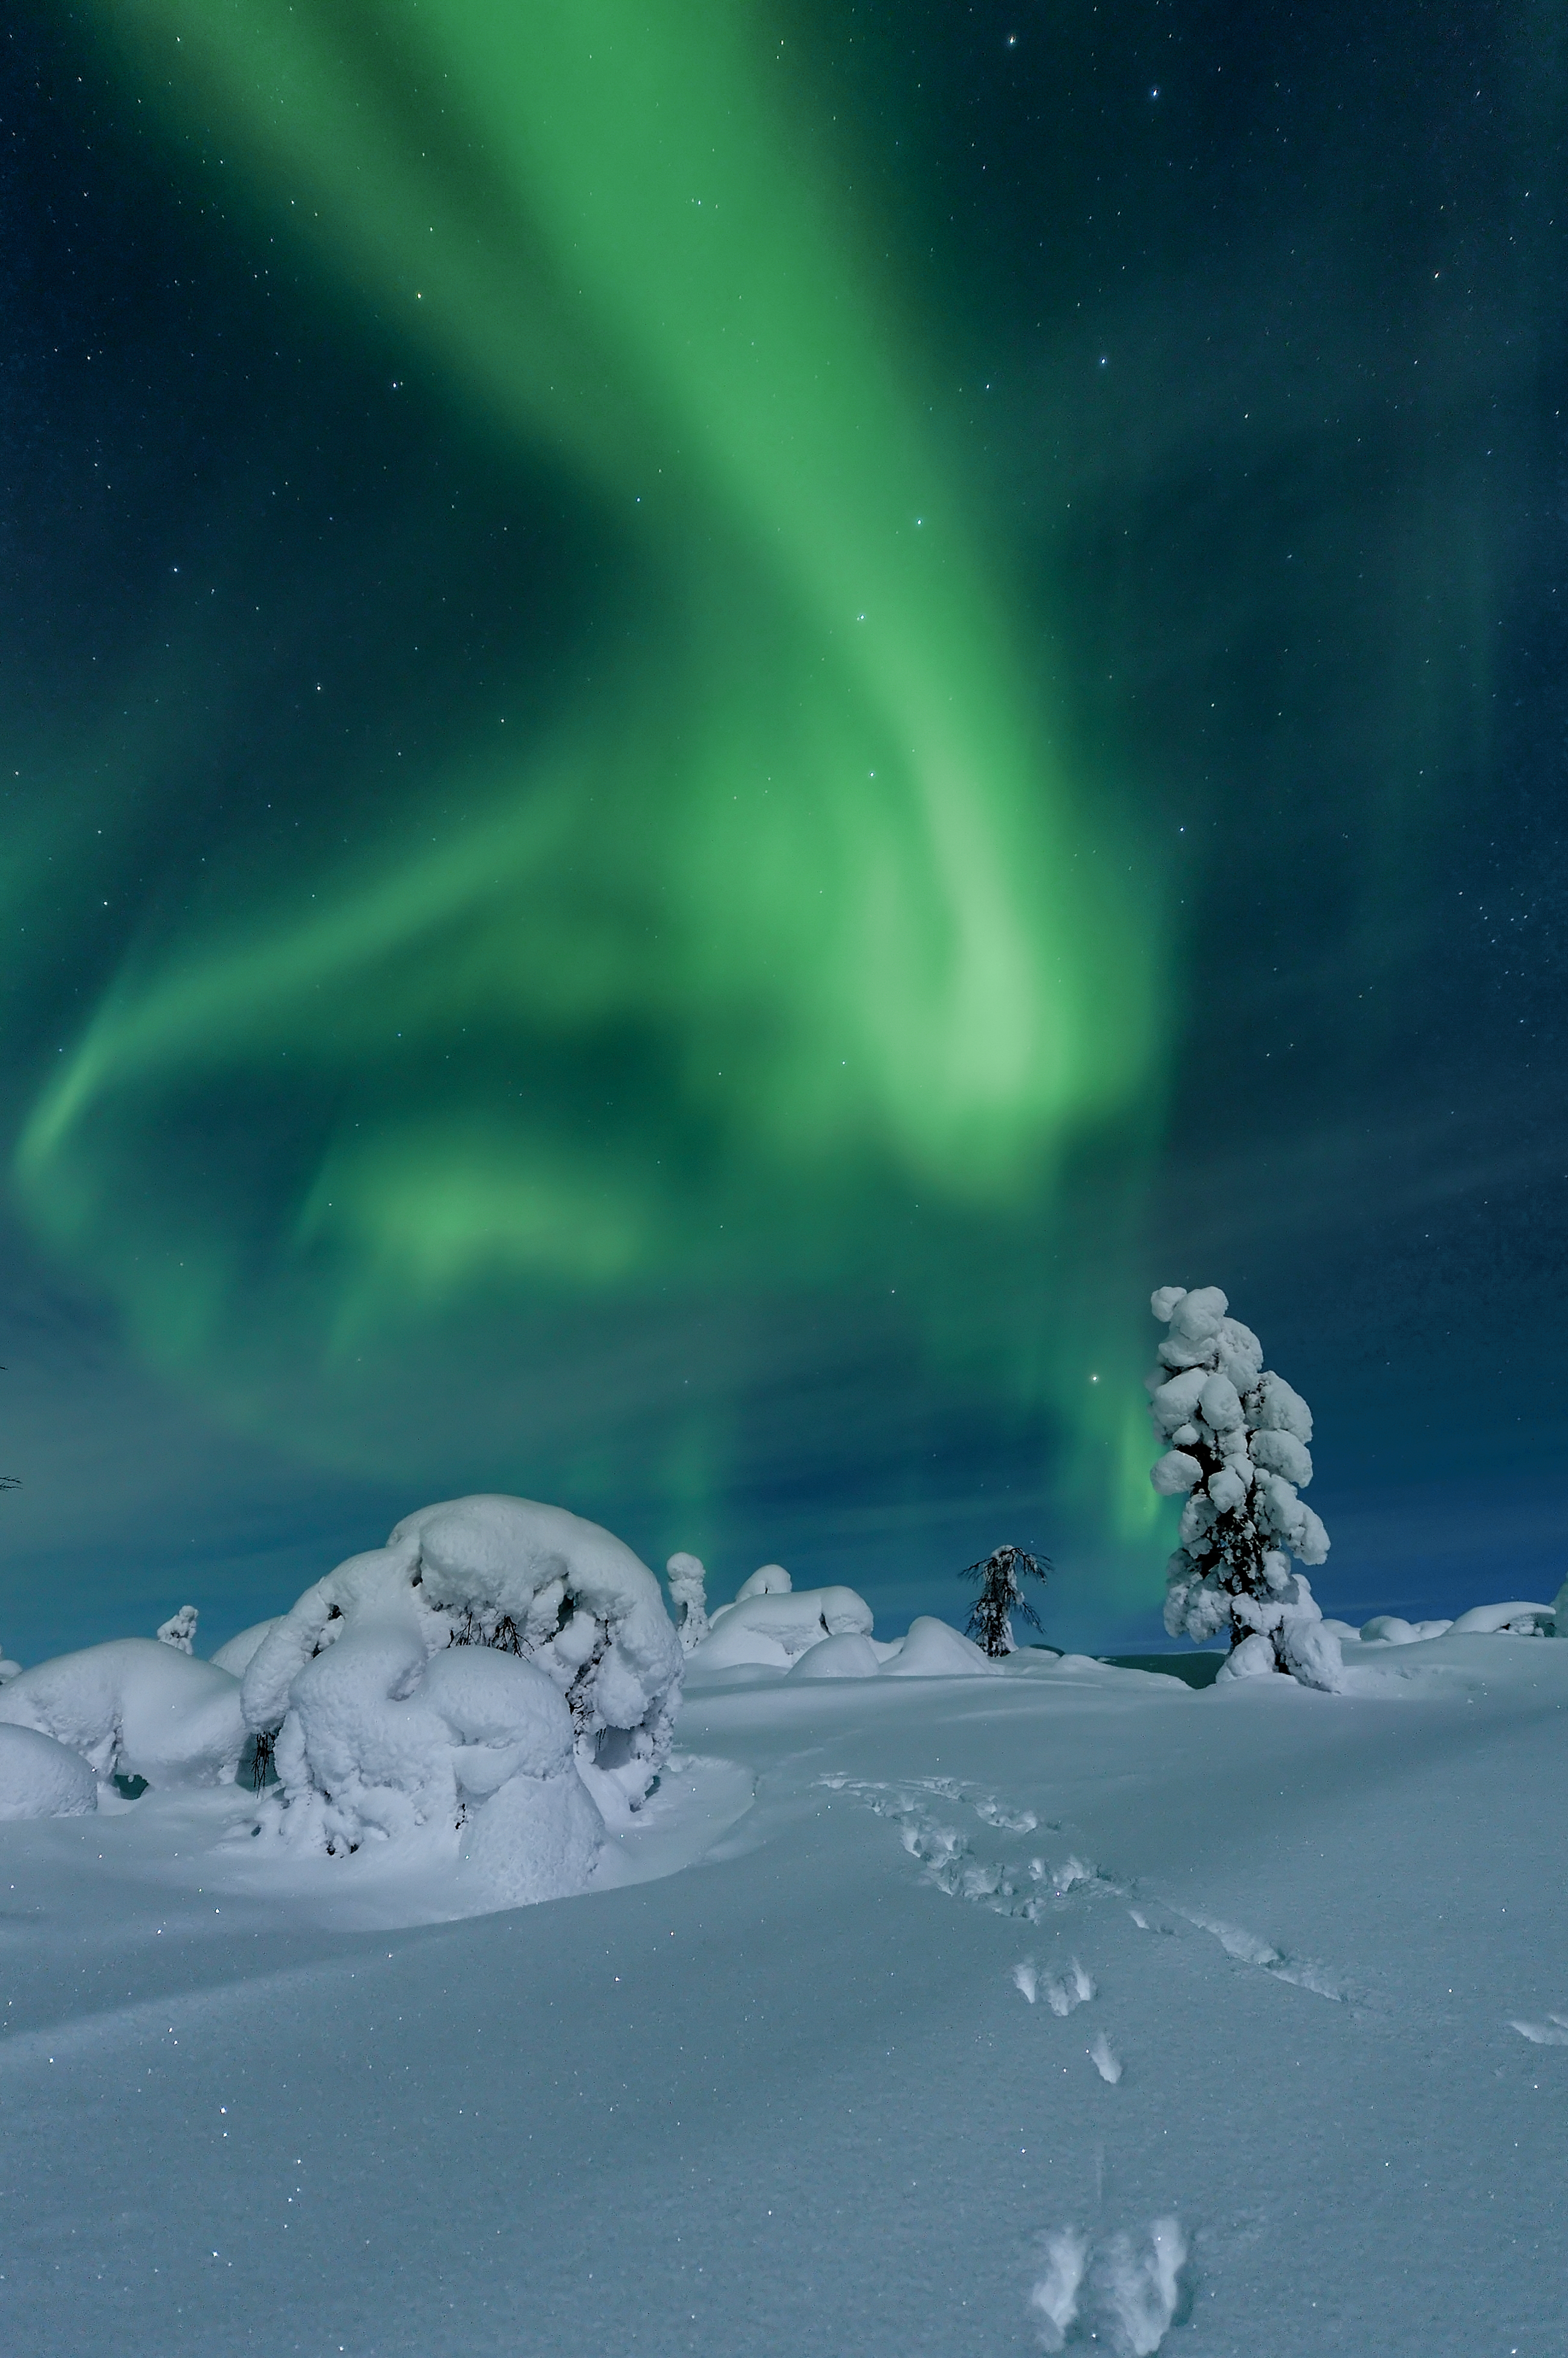 Northern lights above a snowy landscape